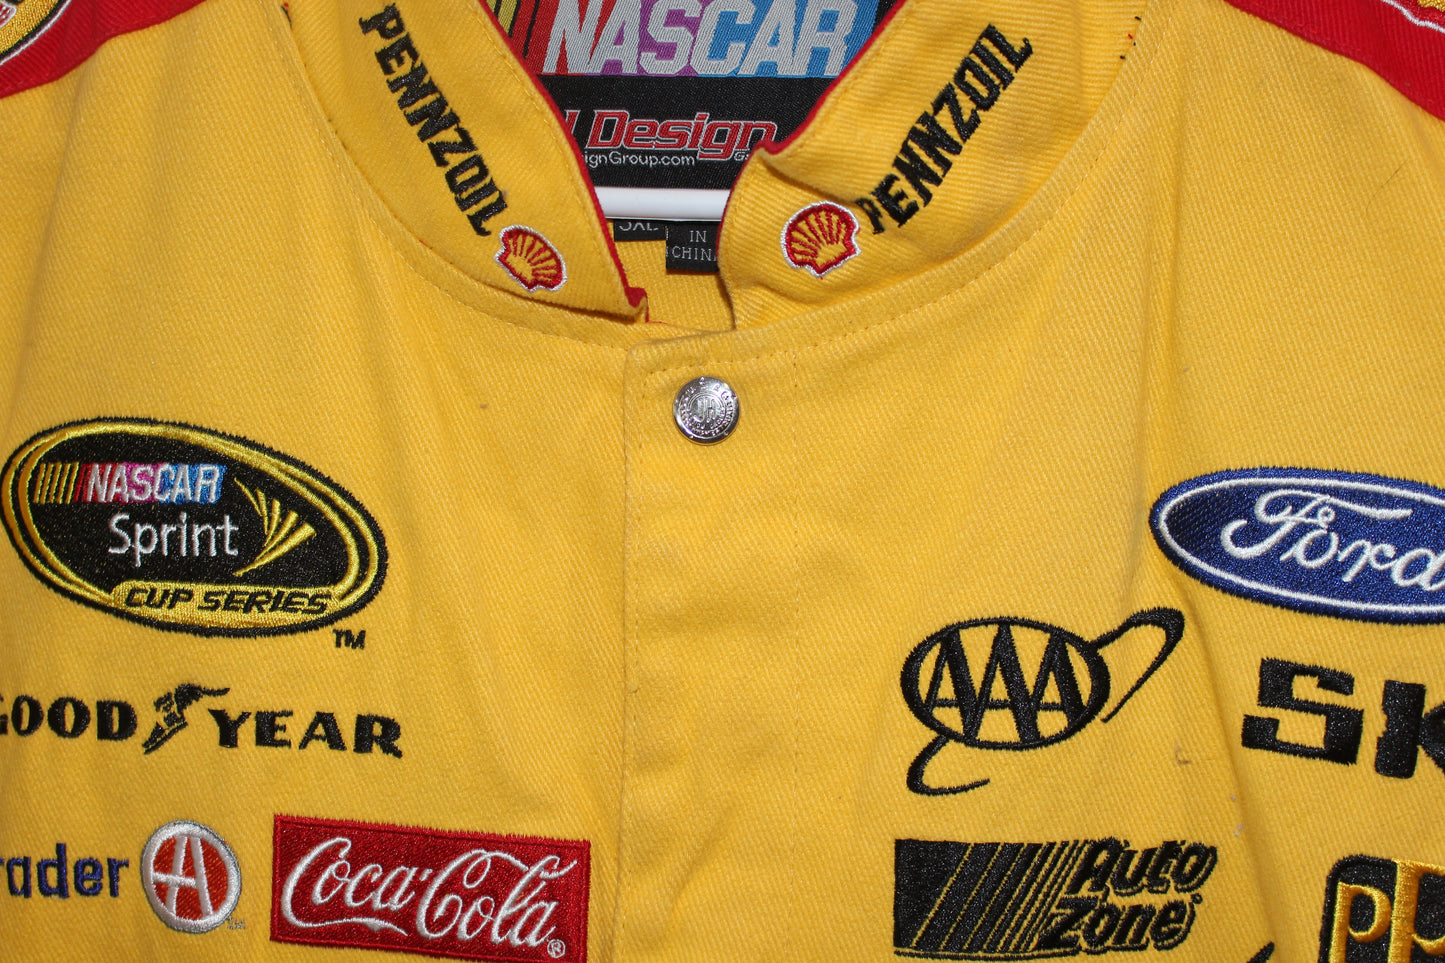 Pennzoil Shell Racing NASCAR Joey Logano (XXXL)